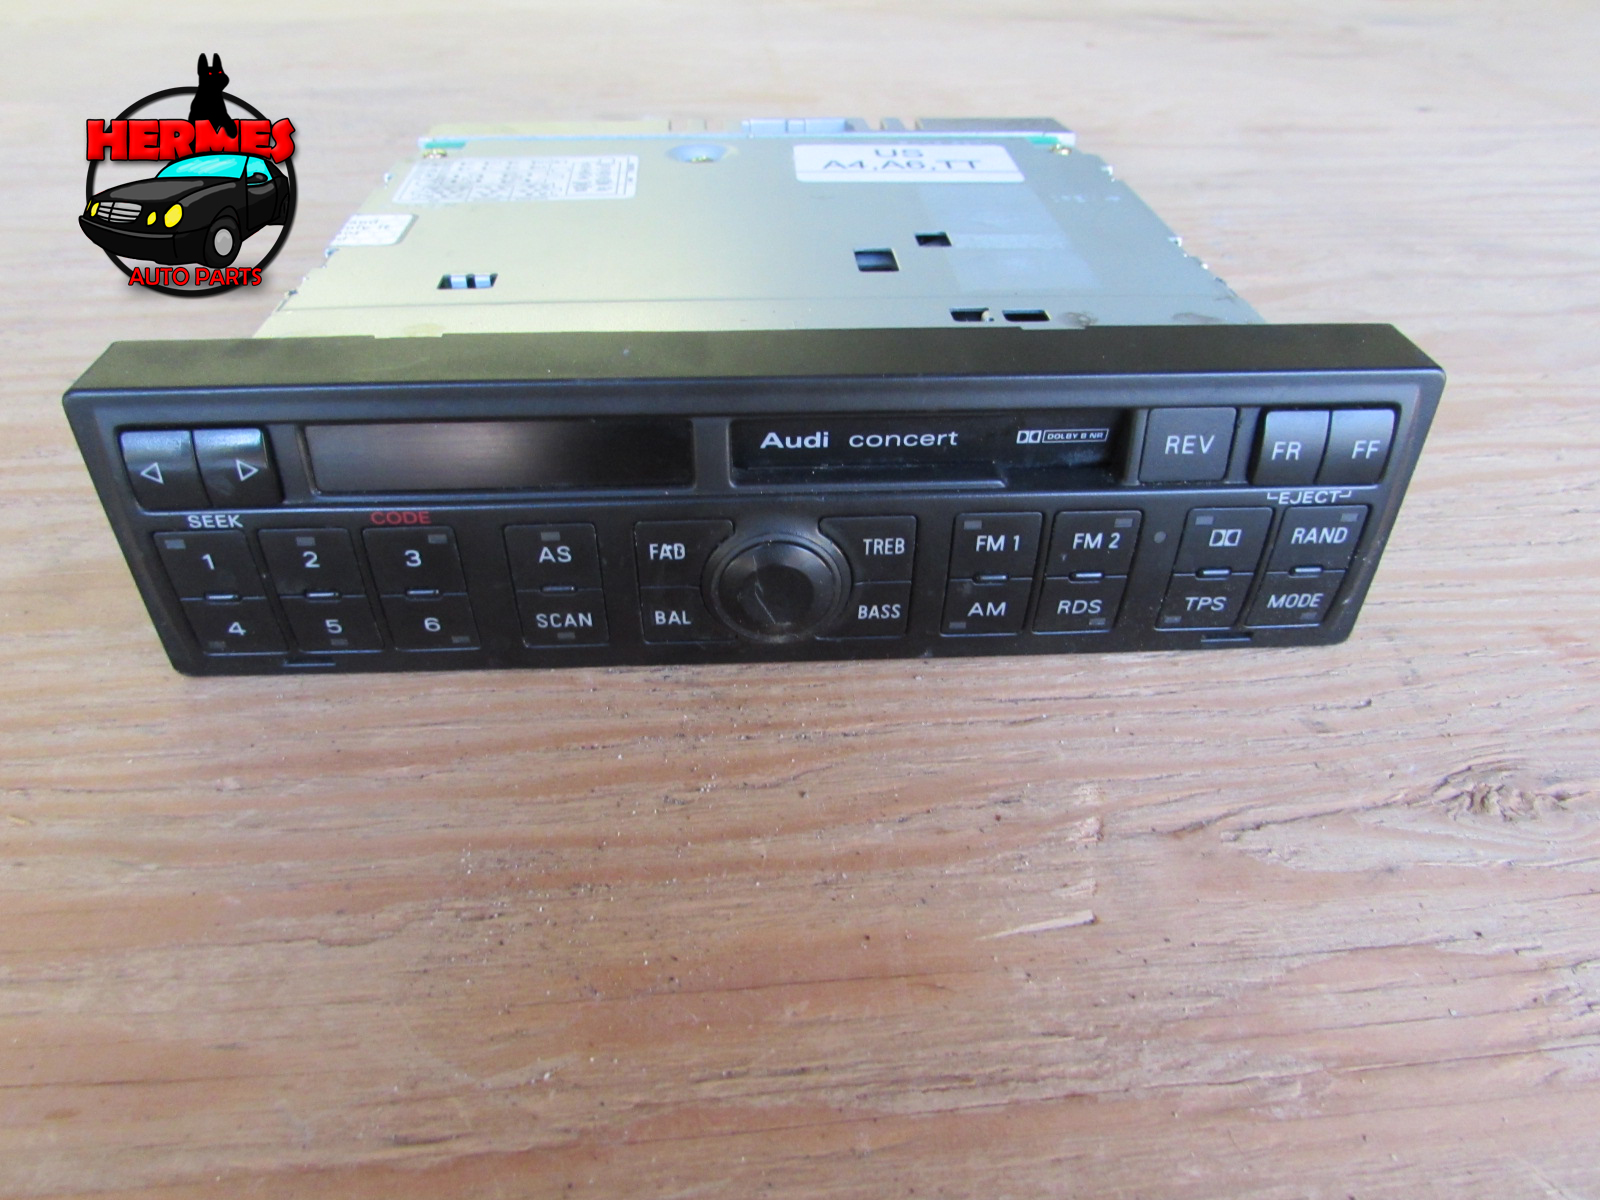 Audi TT Mk1 8N Concert Dash Radio Stereo Tape Deck No Code